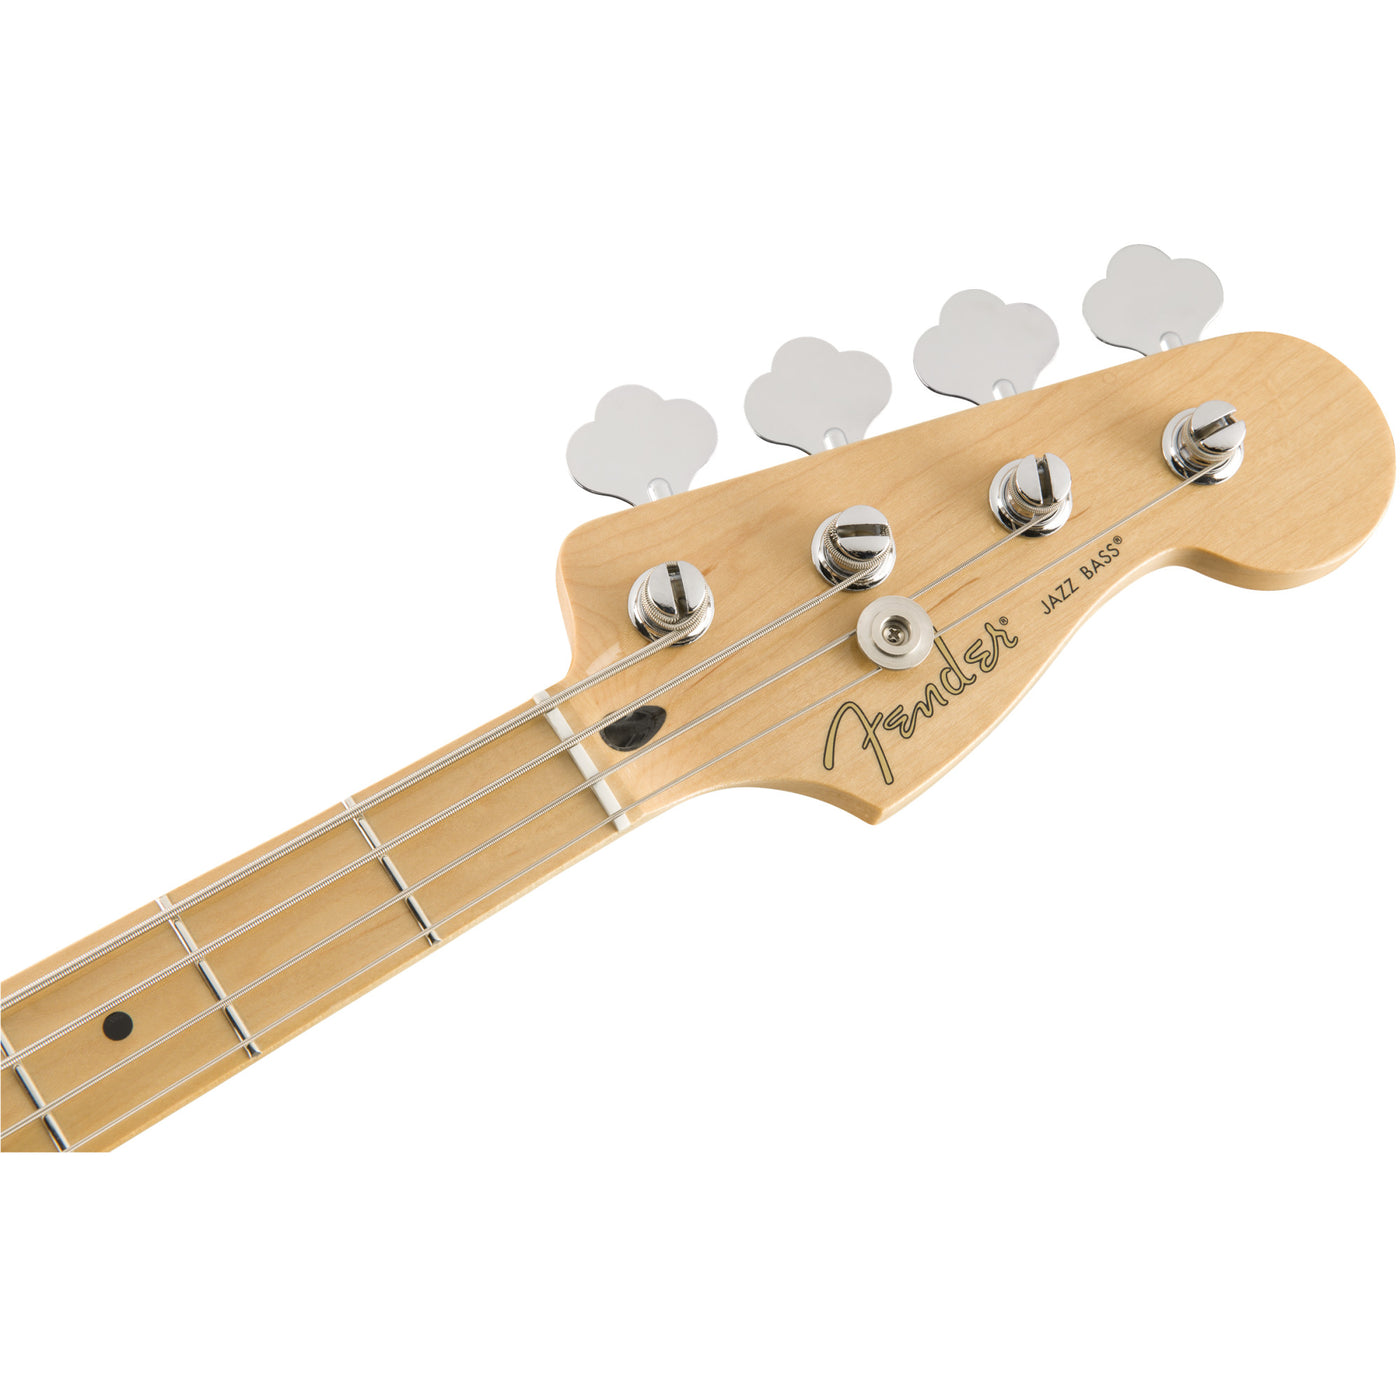 Fender Player Jazz Bass Electric Guitar, Tidepool (0149902513)